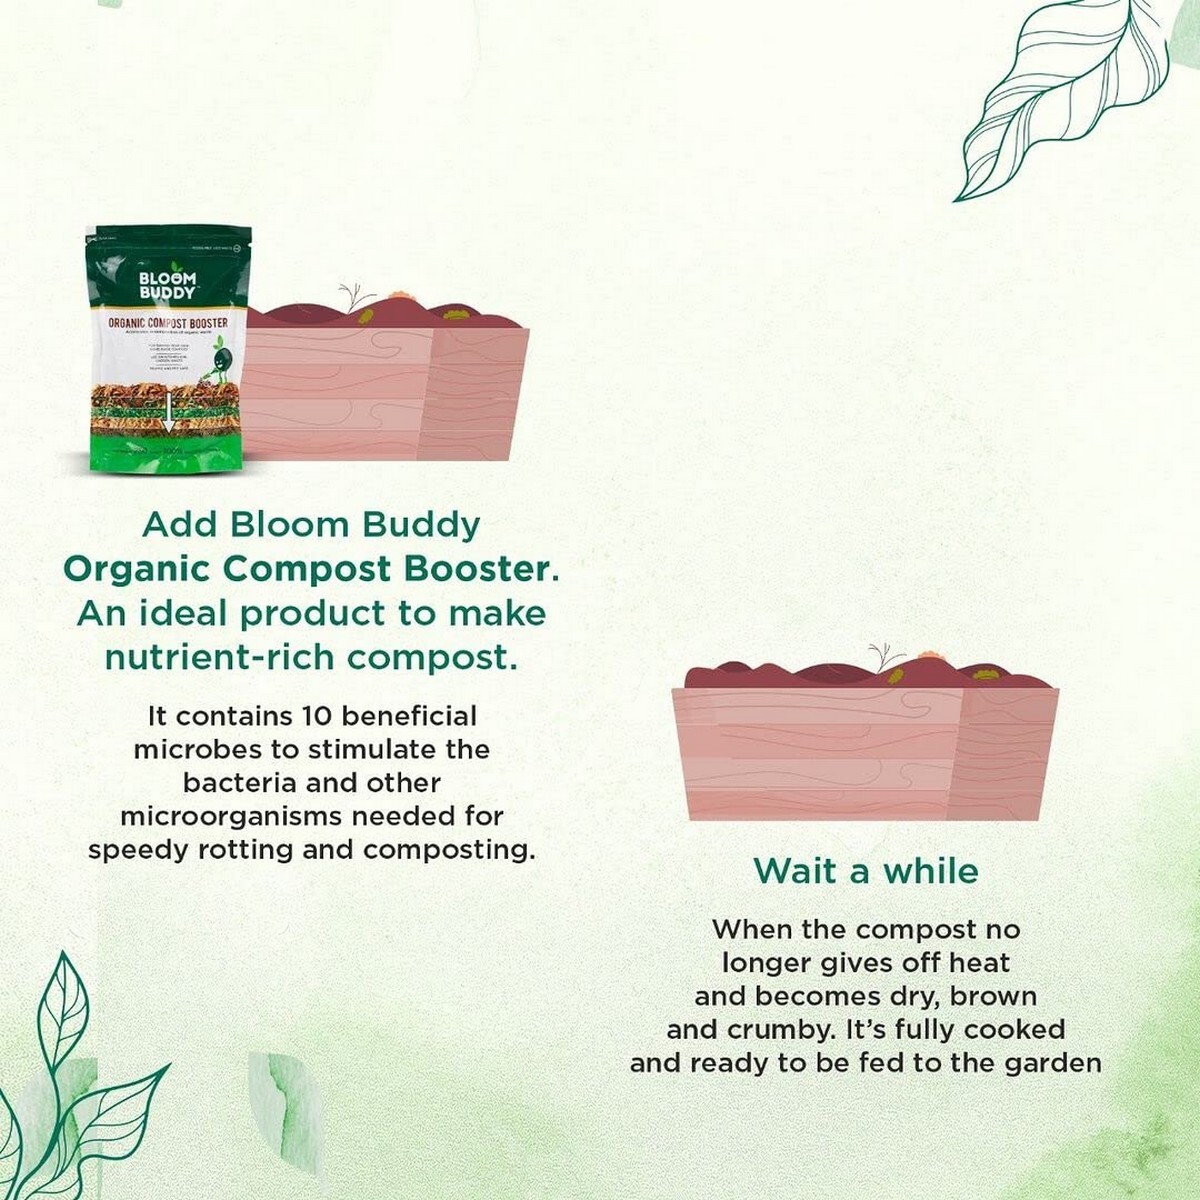 Bloom Buddy Organic compost Booster OCB 250g